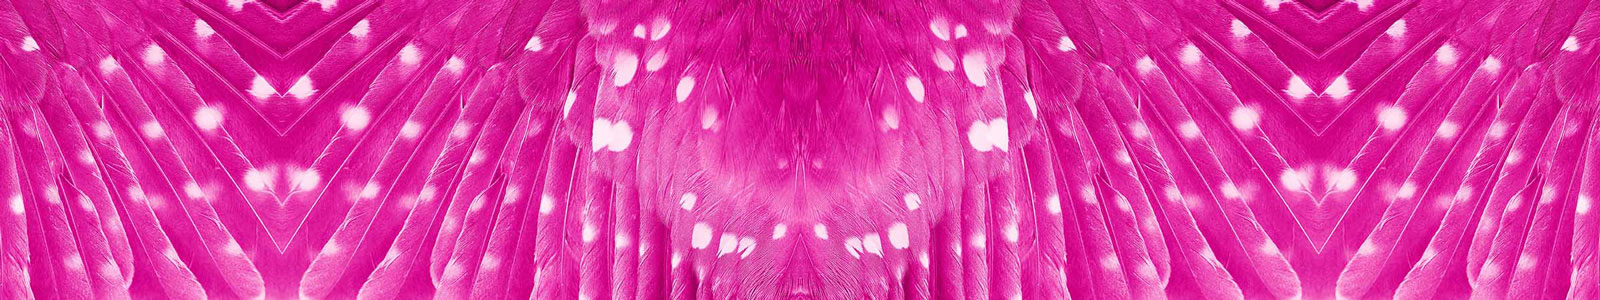 №2745 - Пурпурное крыло птицы крупным планом